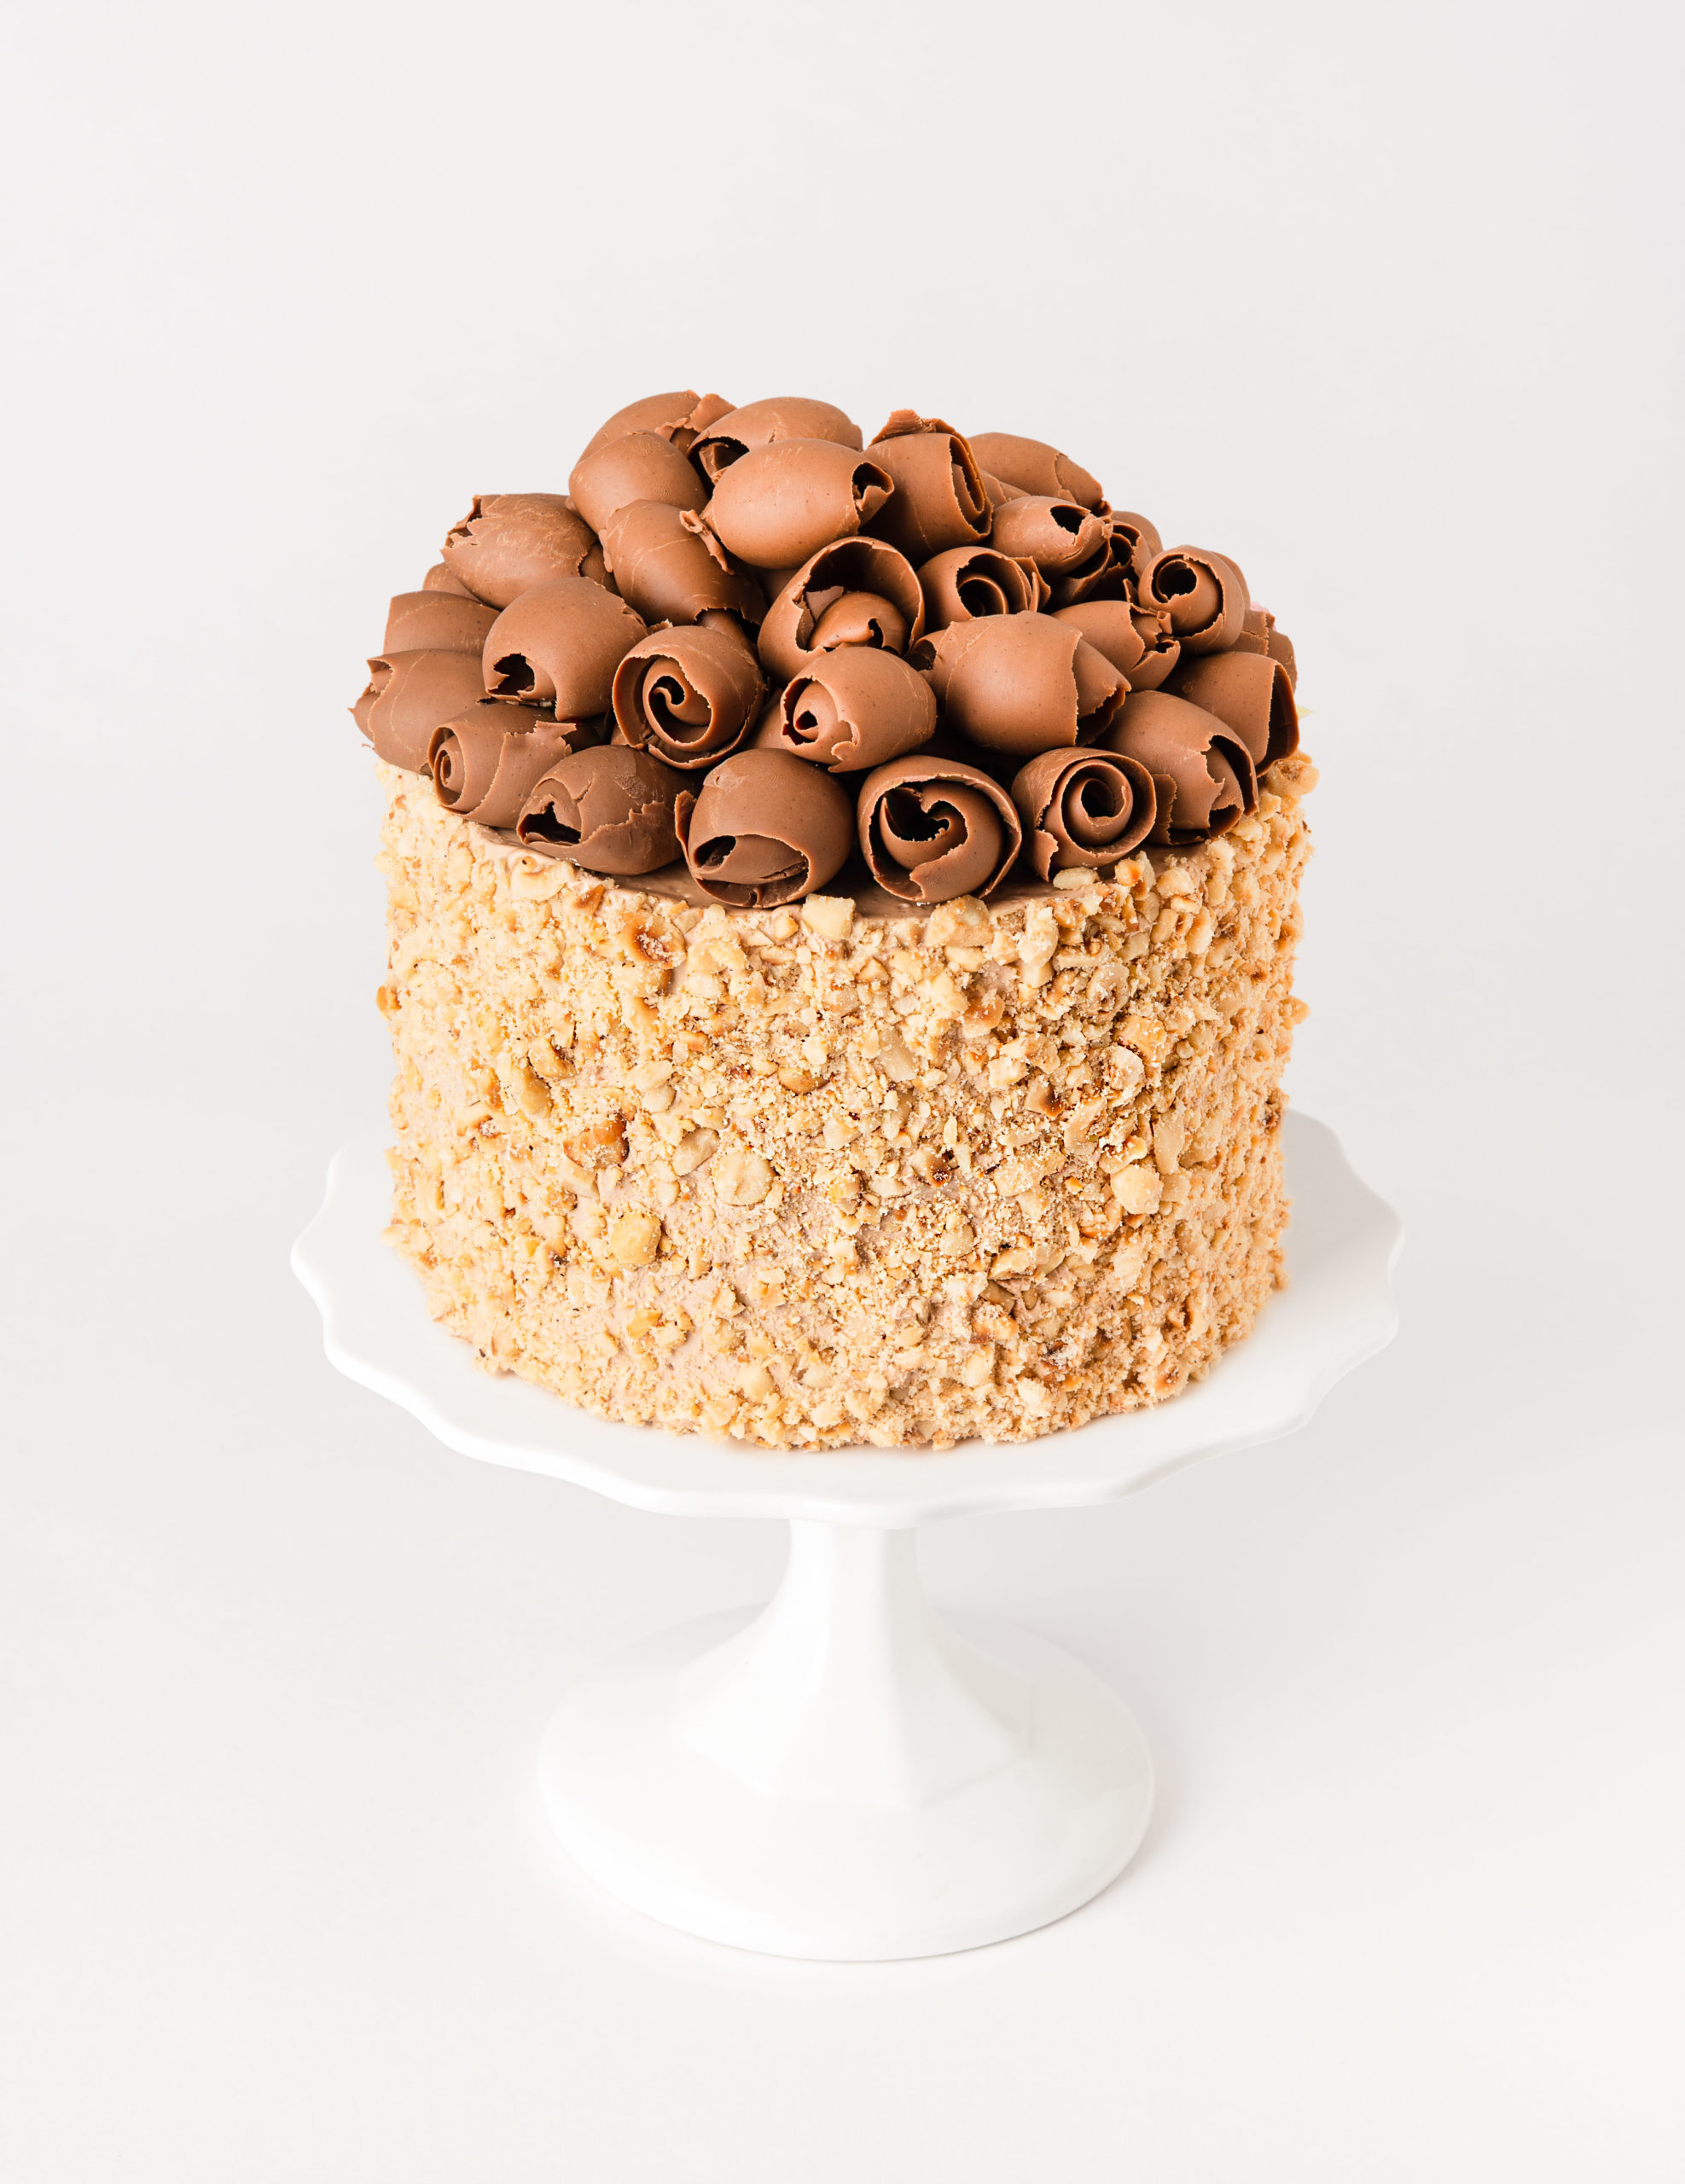 Details More Than Belgian Chocolate Hazelnut Cake In Eteachers